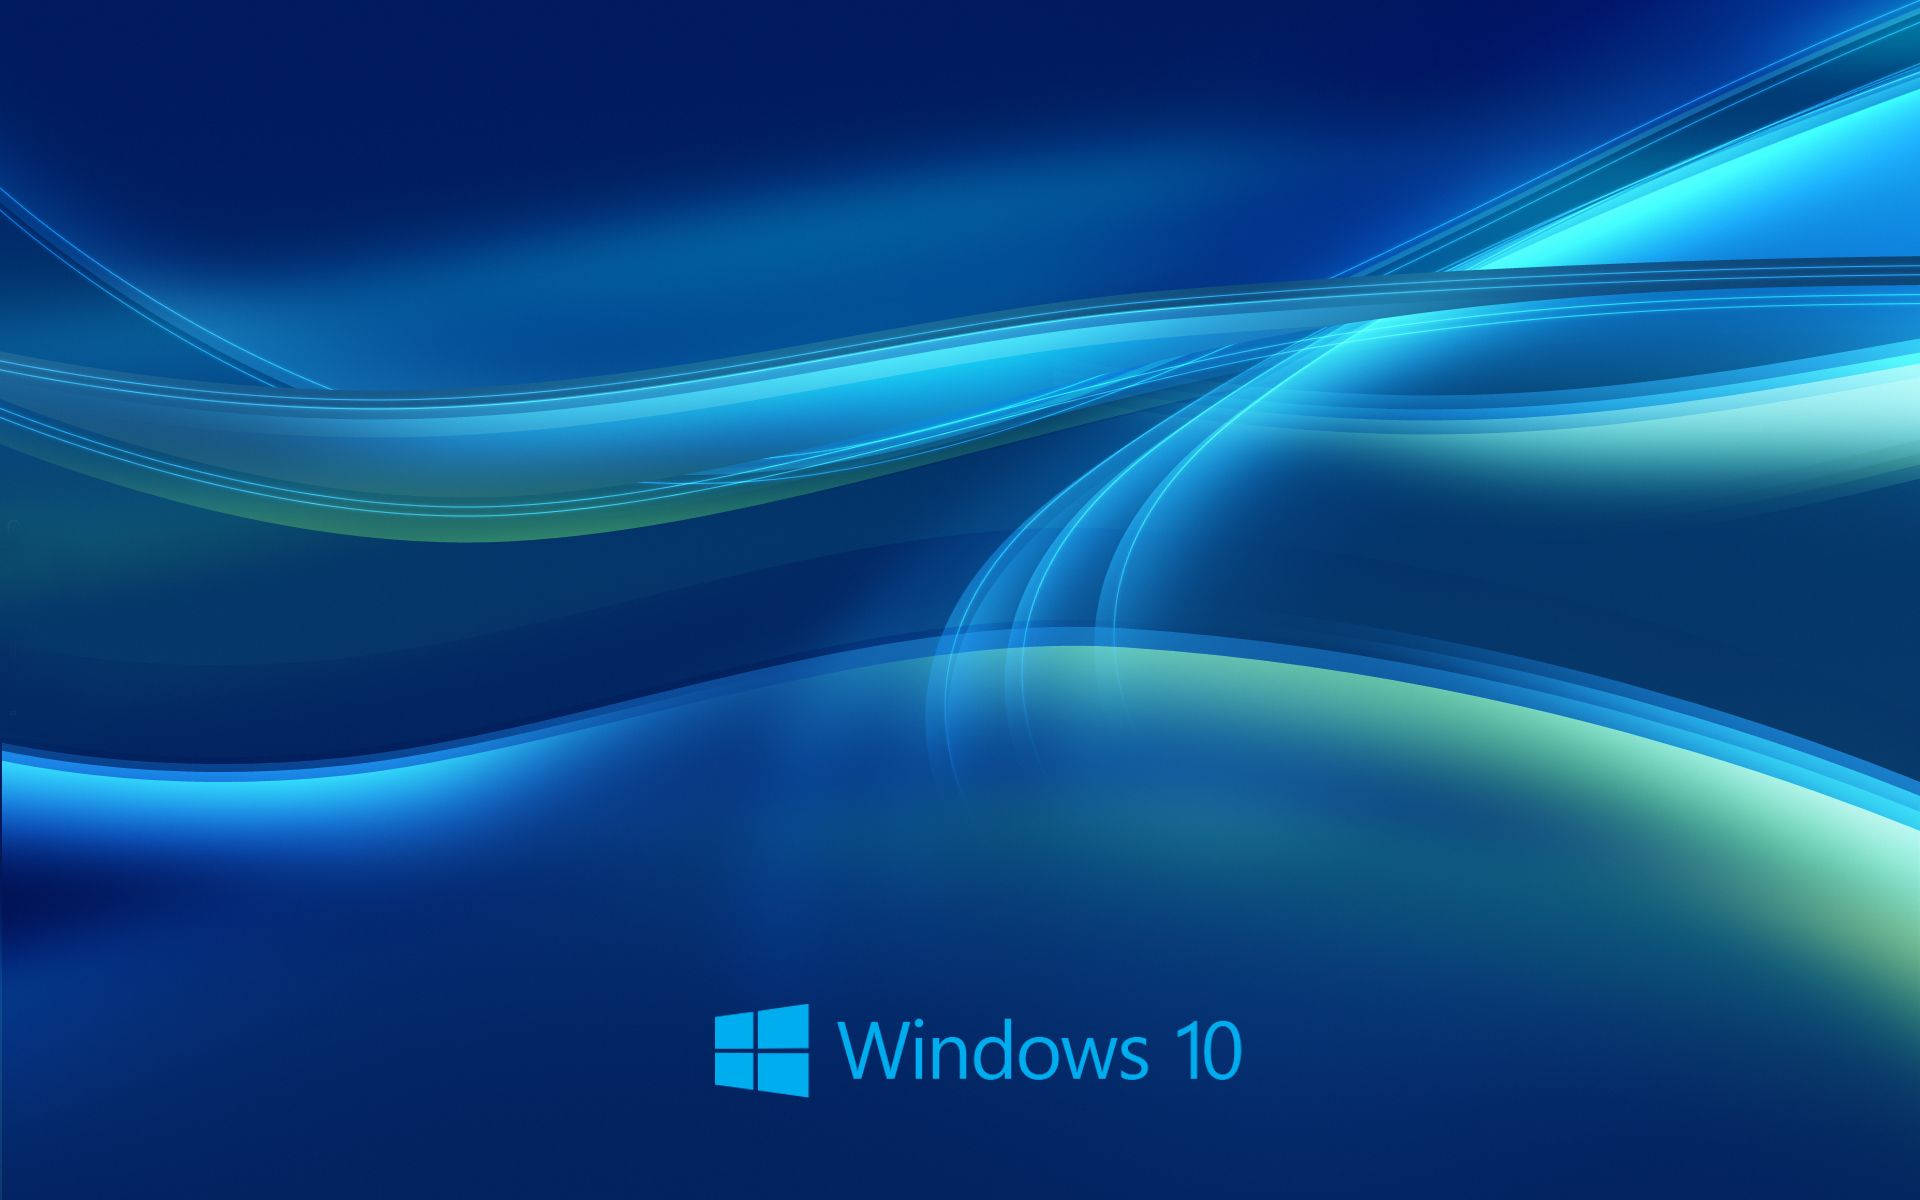 Windows 10 Minimalist Theme Background